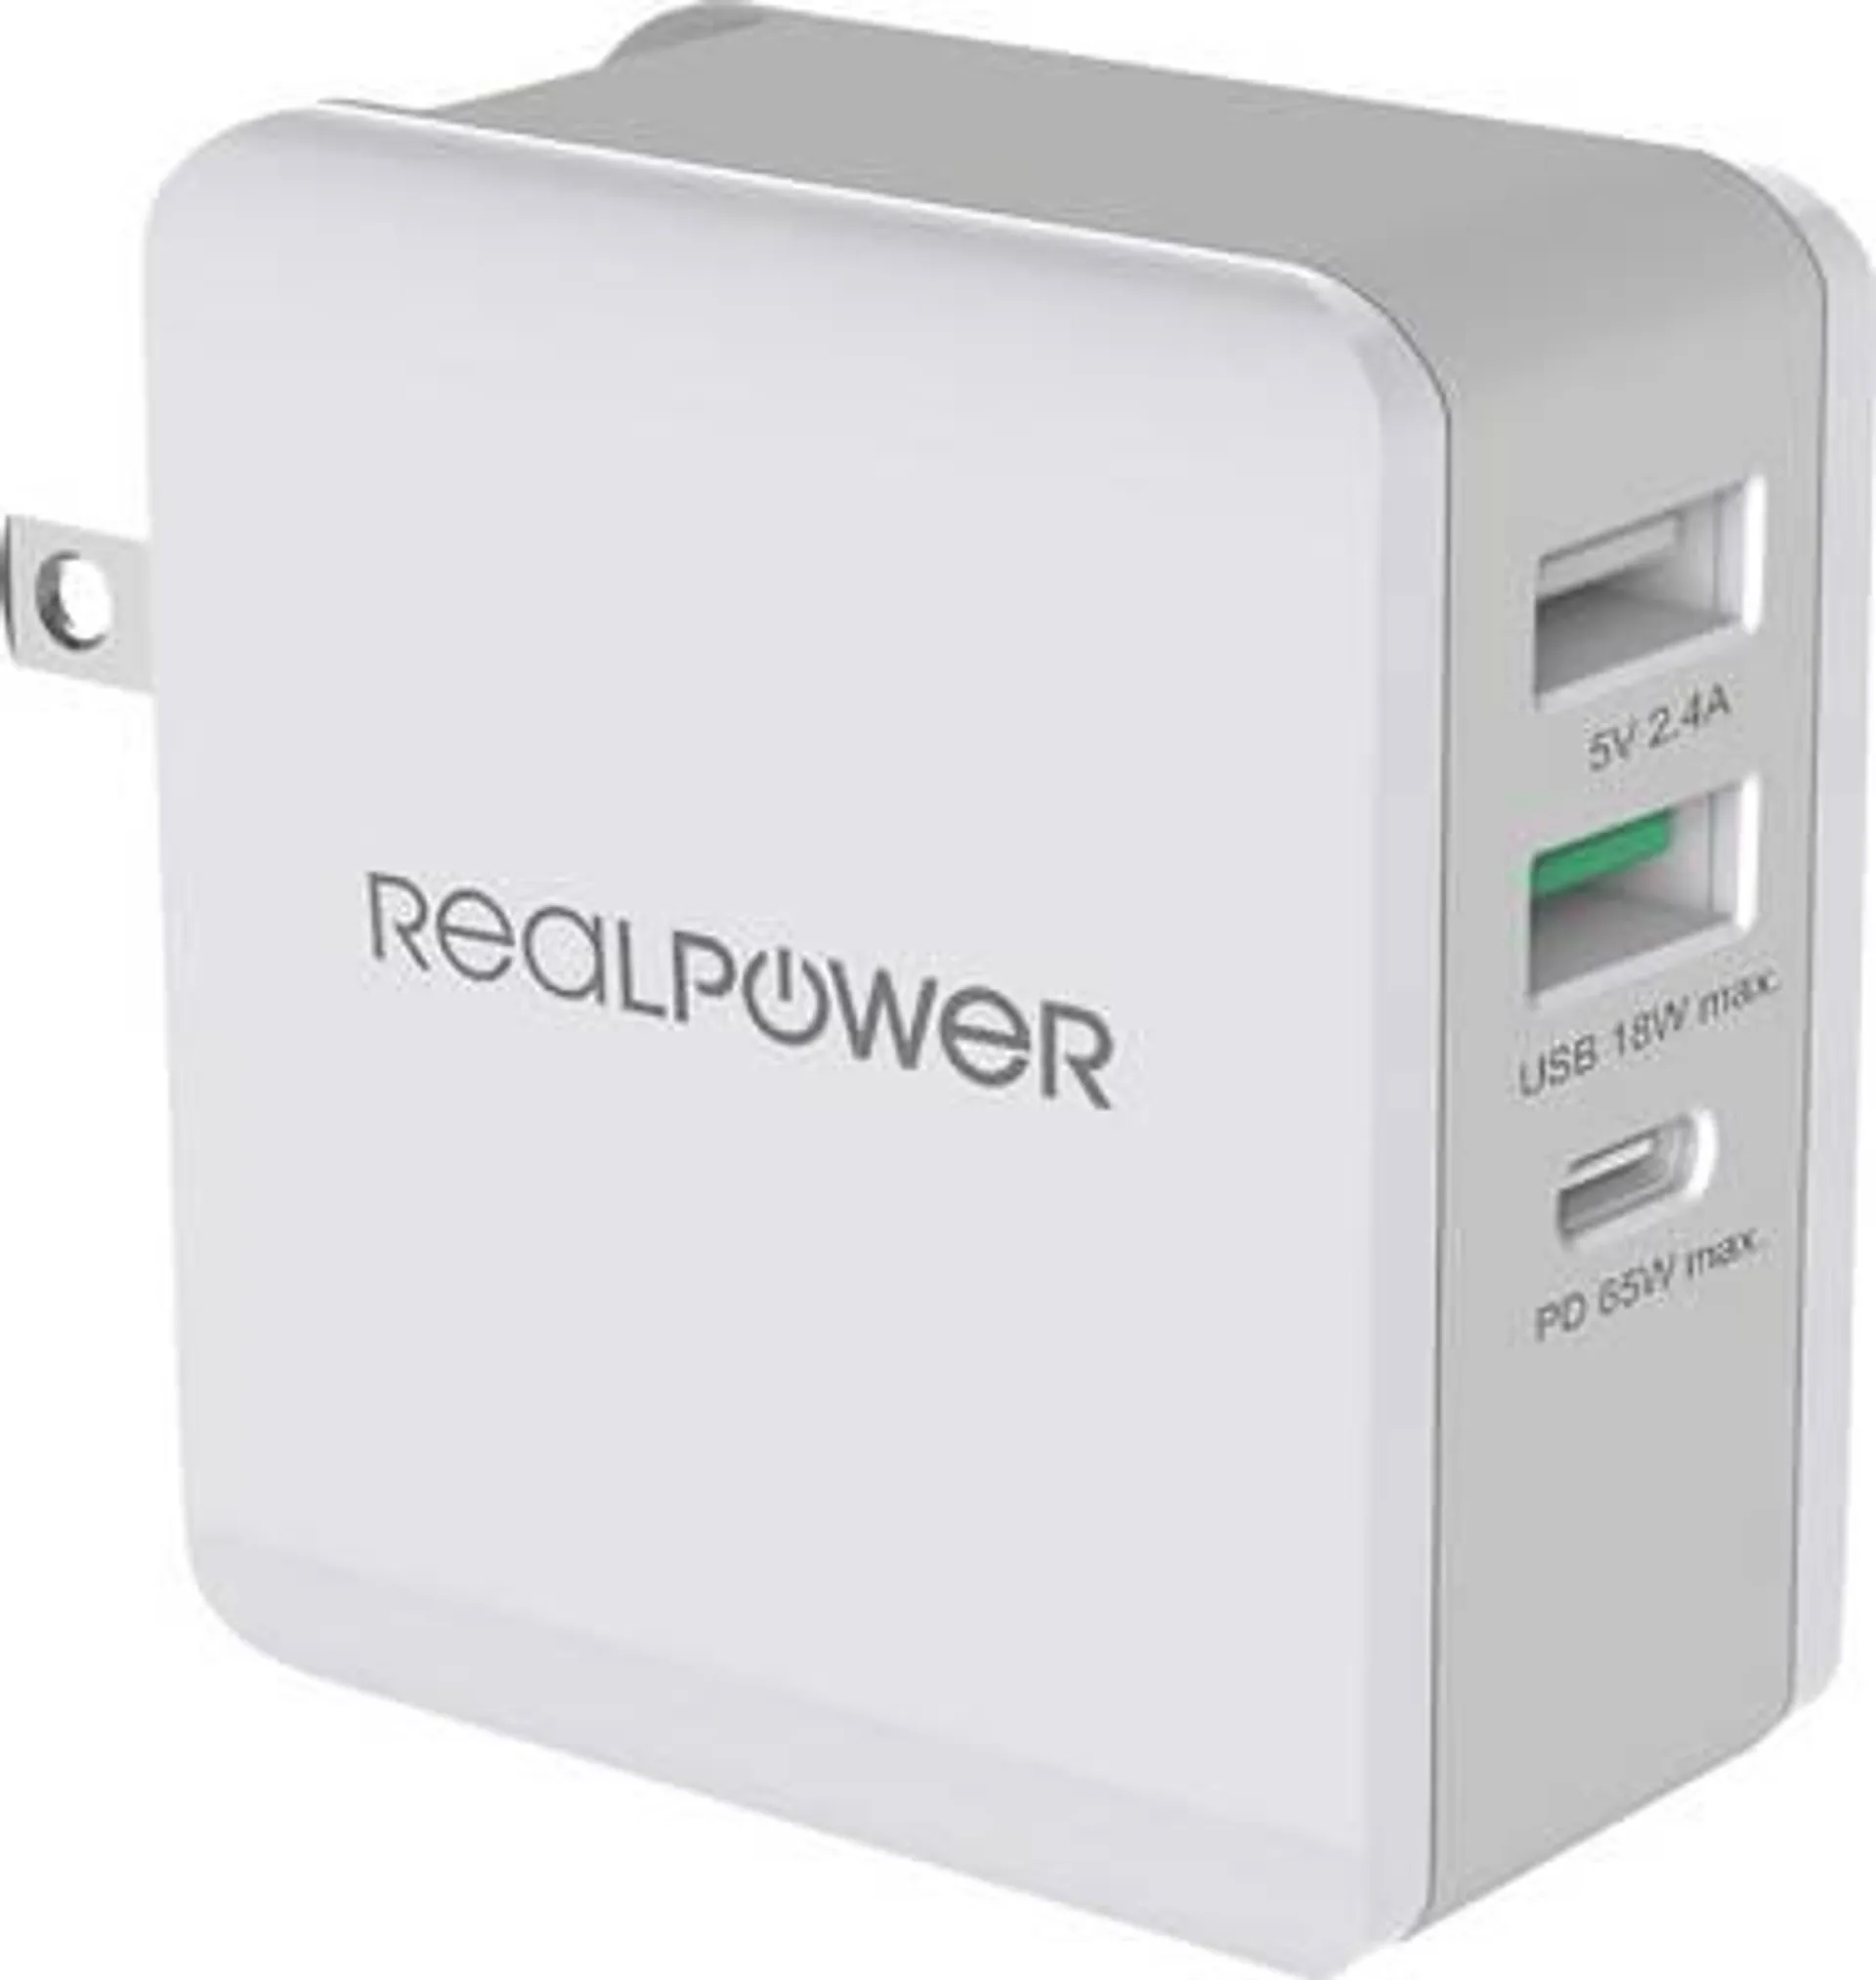 RealPower DeskCharge-65 306837 USB charger Mains socket 3 x USB